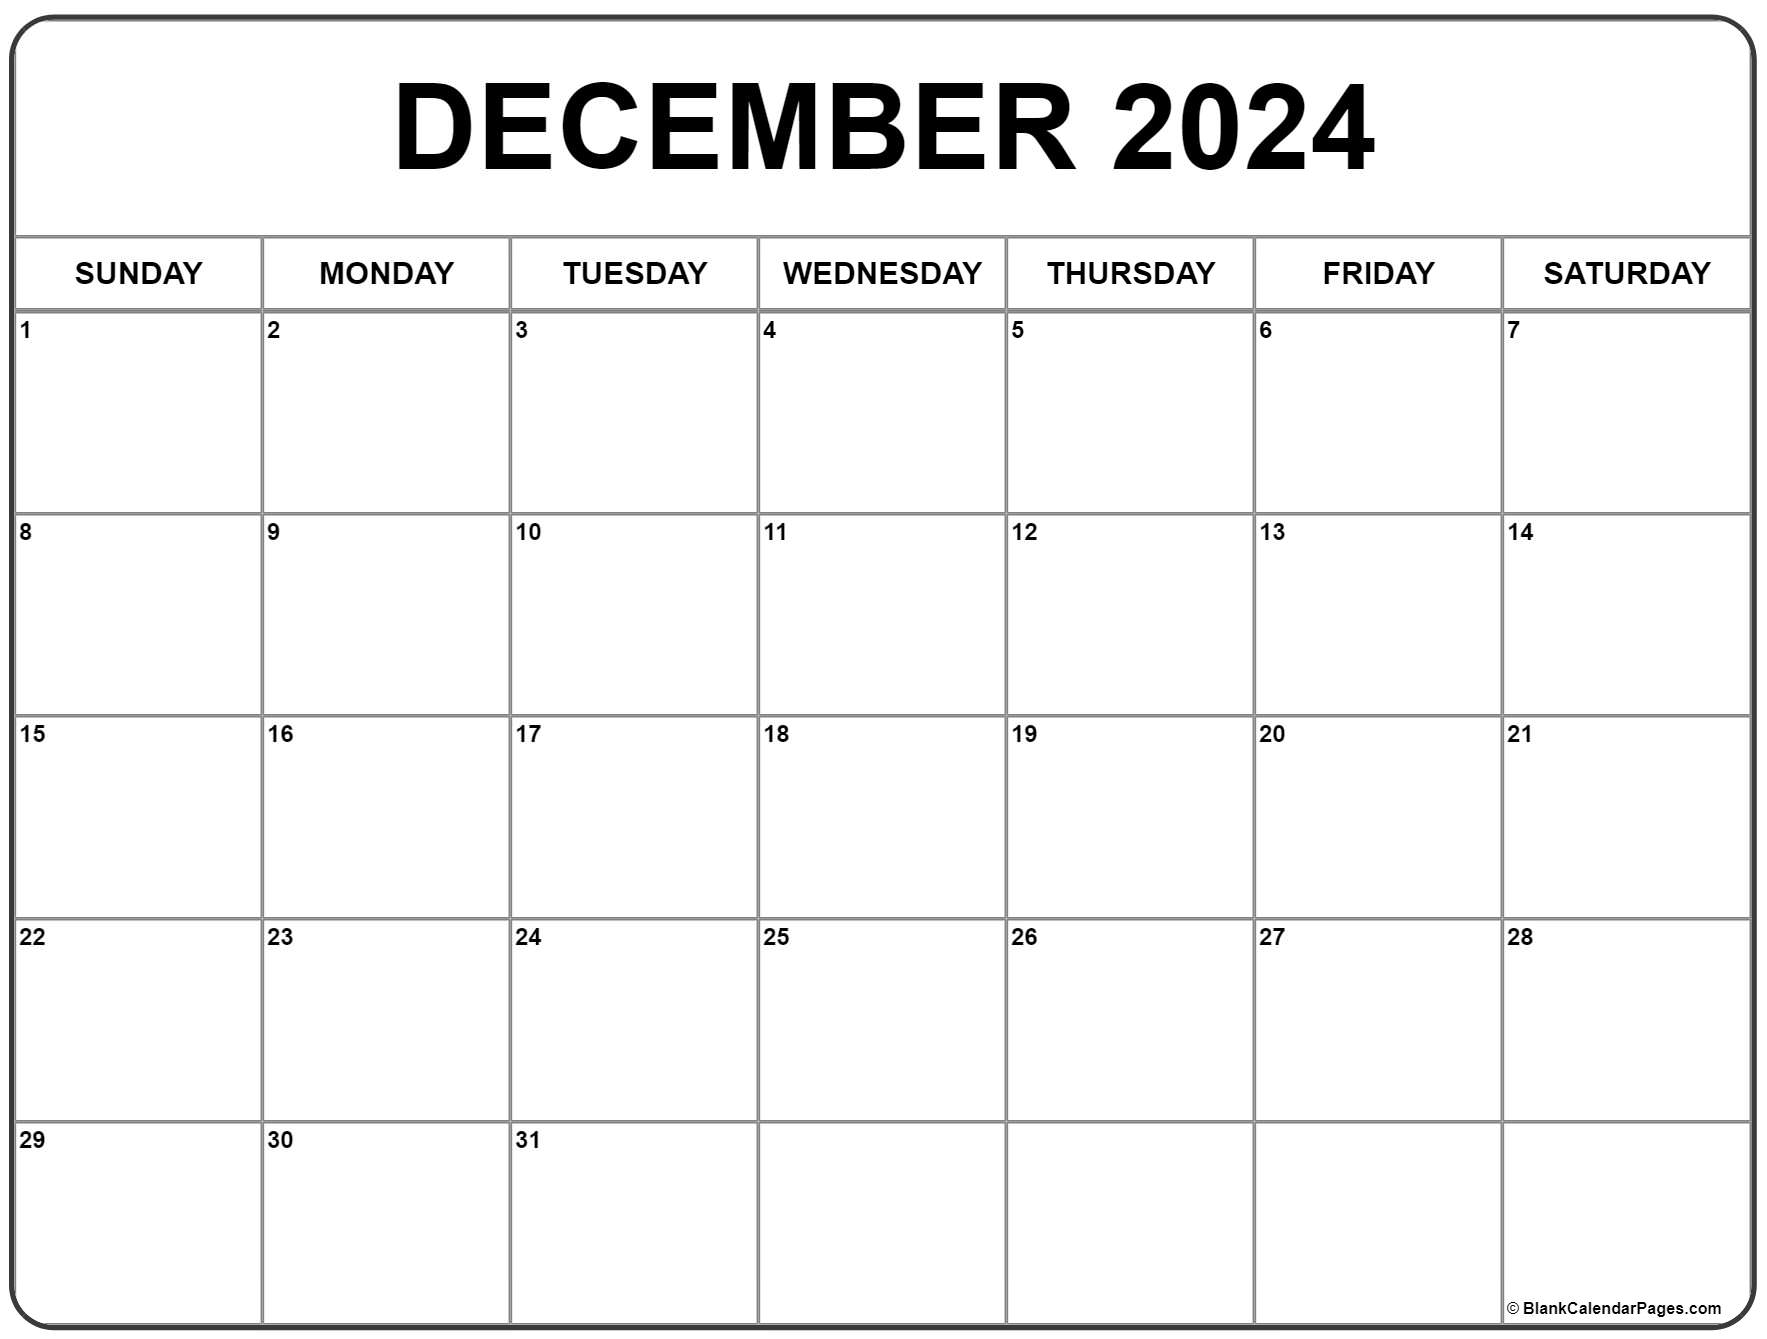 Free Printable Calendar Dec 2022 December 2022 Calendar | Free Printable Calendar Templates